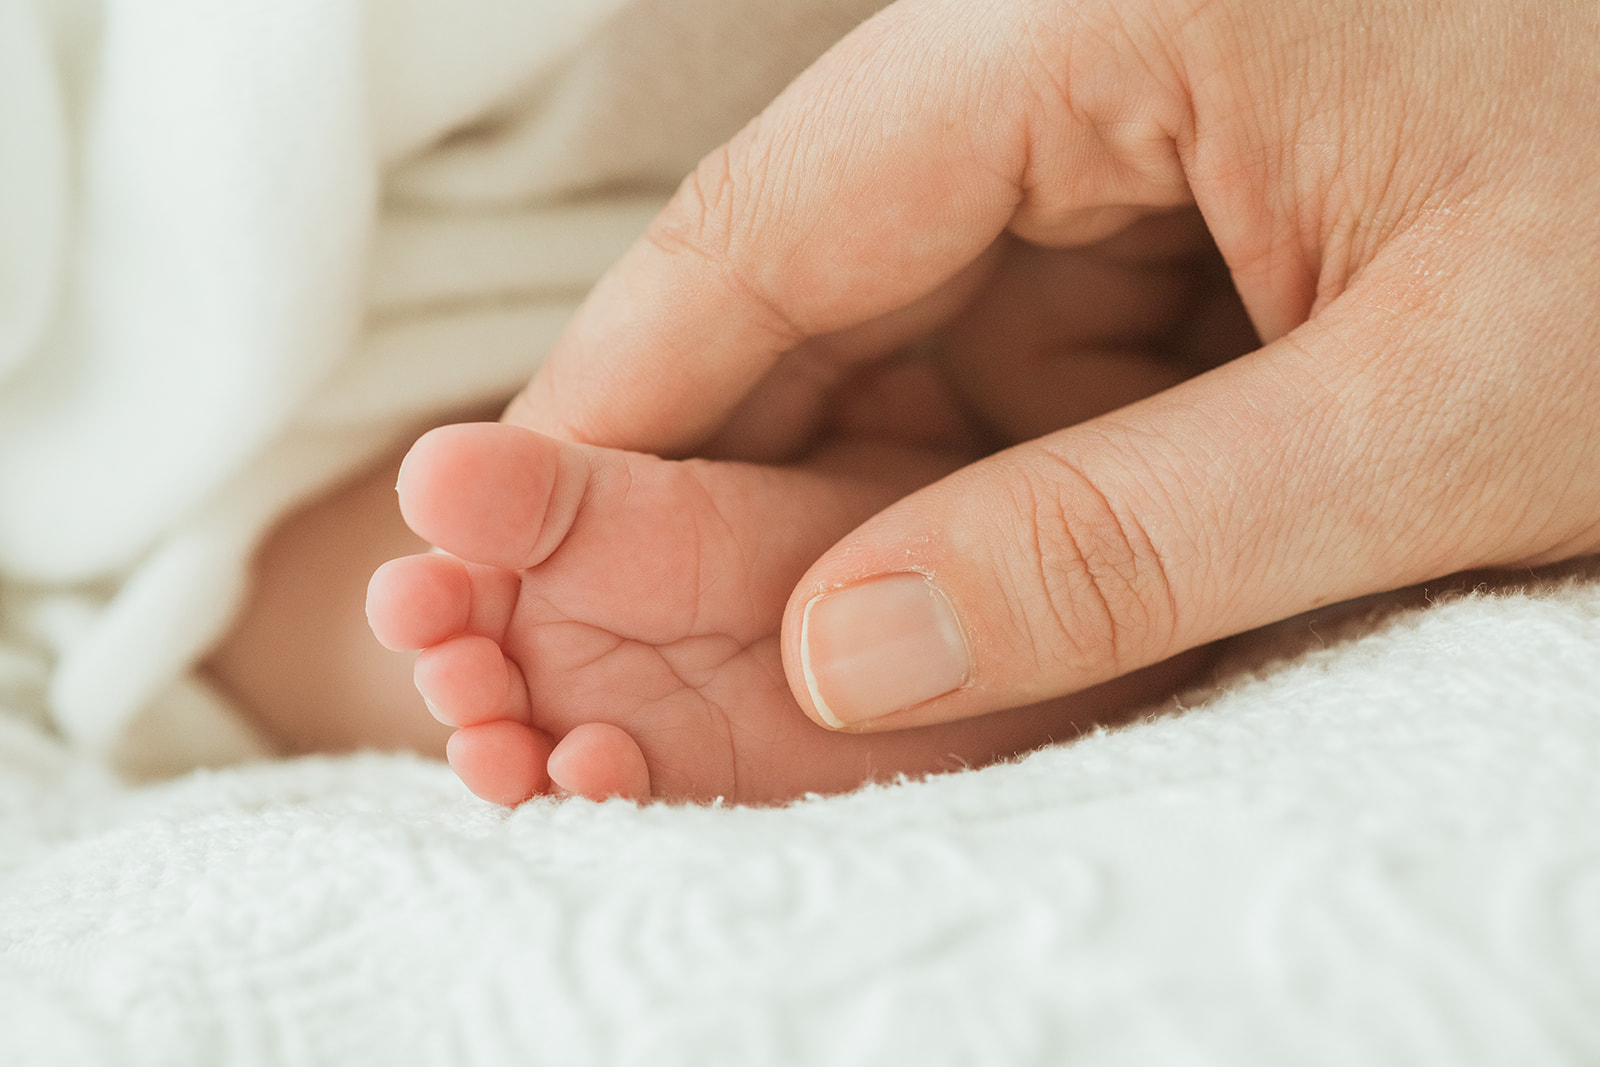 nashville newborn session. baby feet